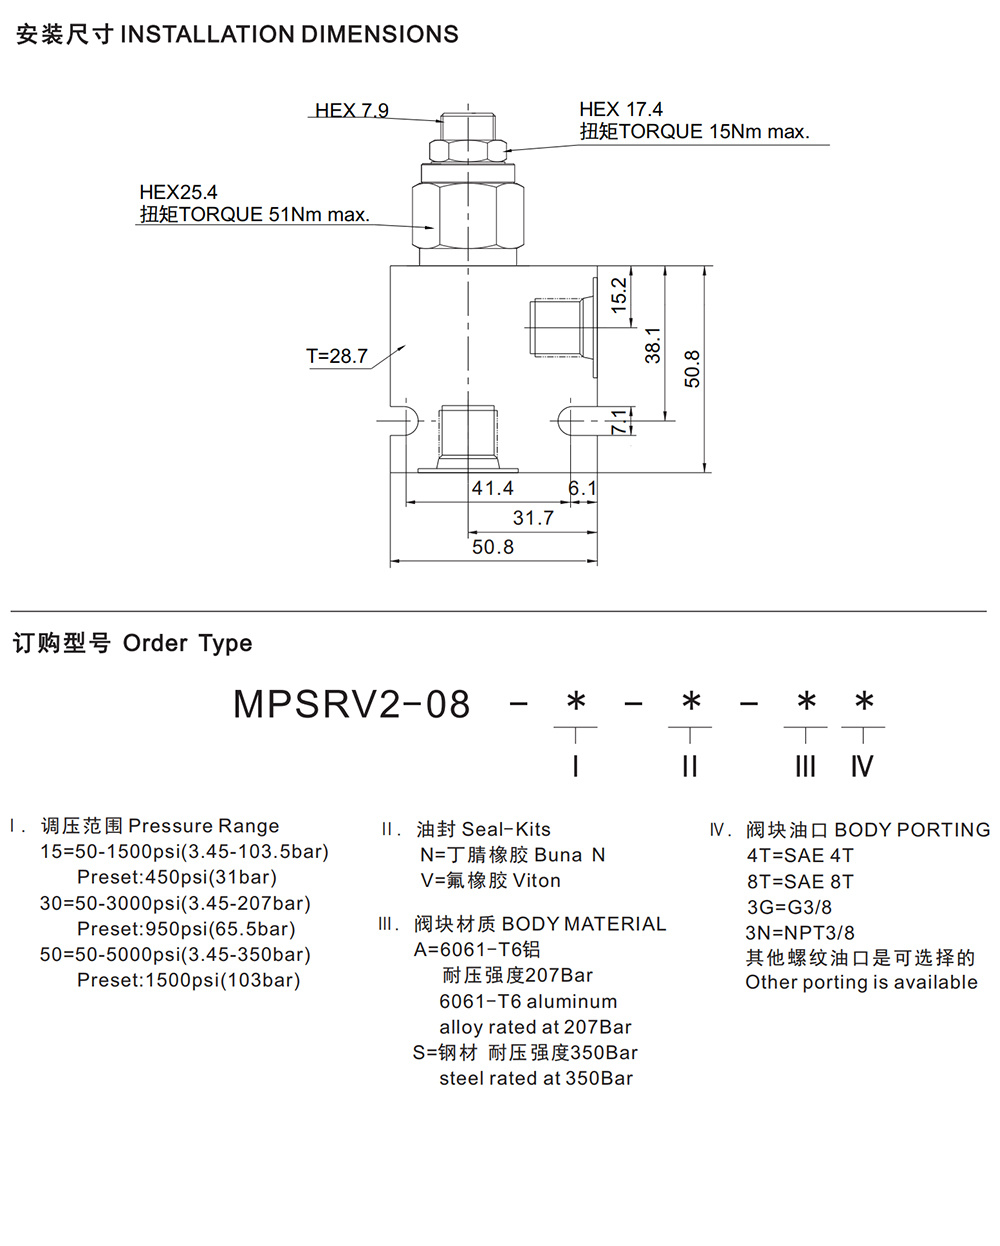 MPSRV2-08